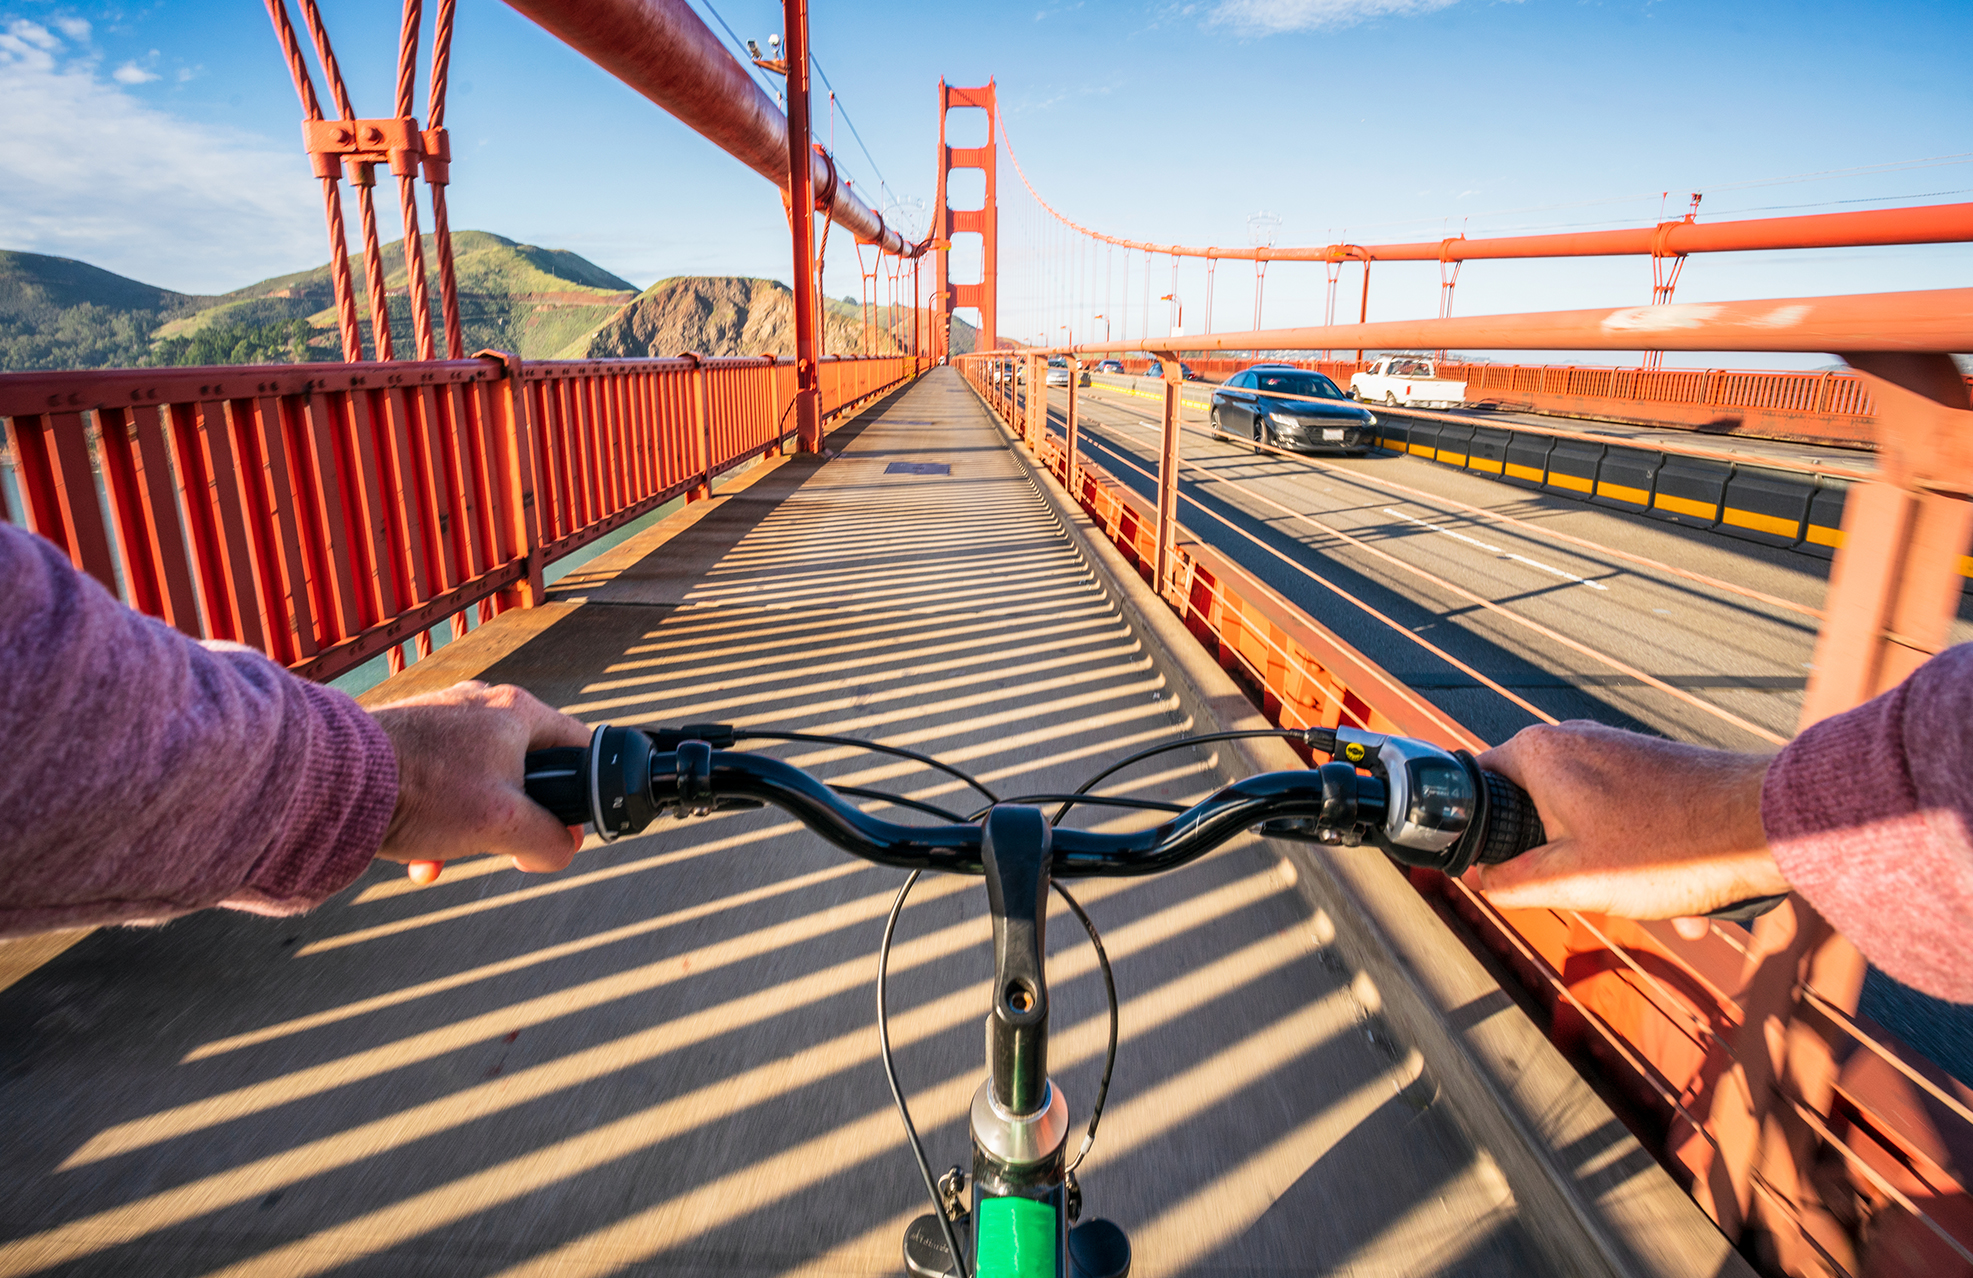 The Golden Gate Bridge bike path